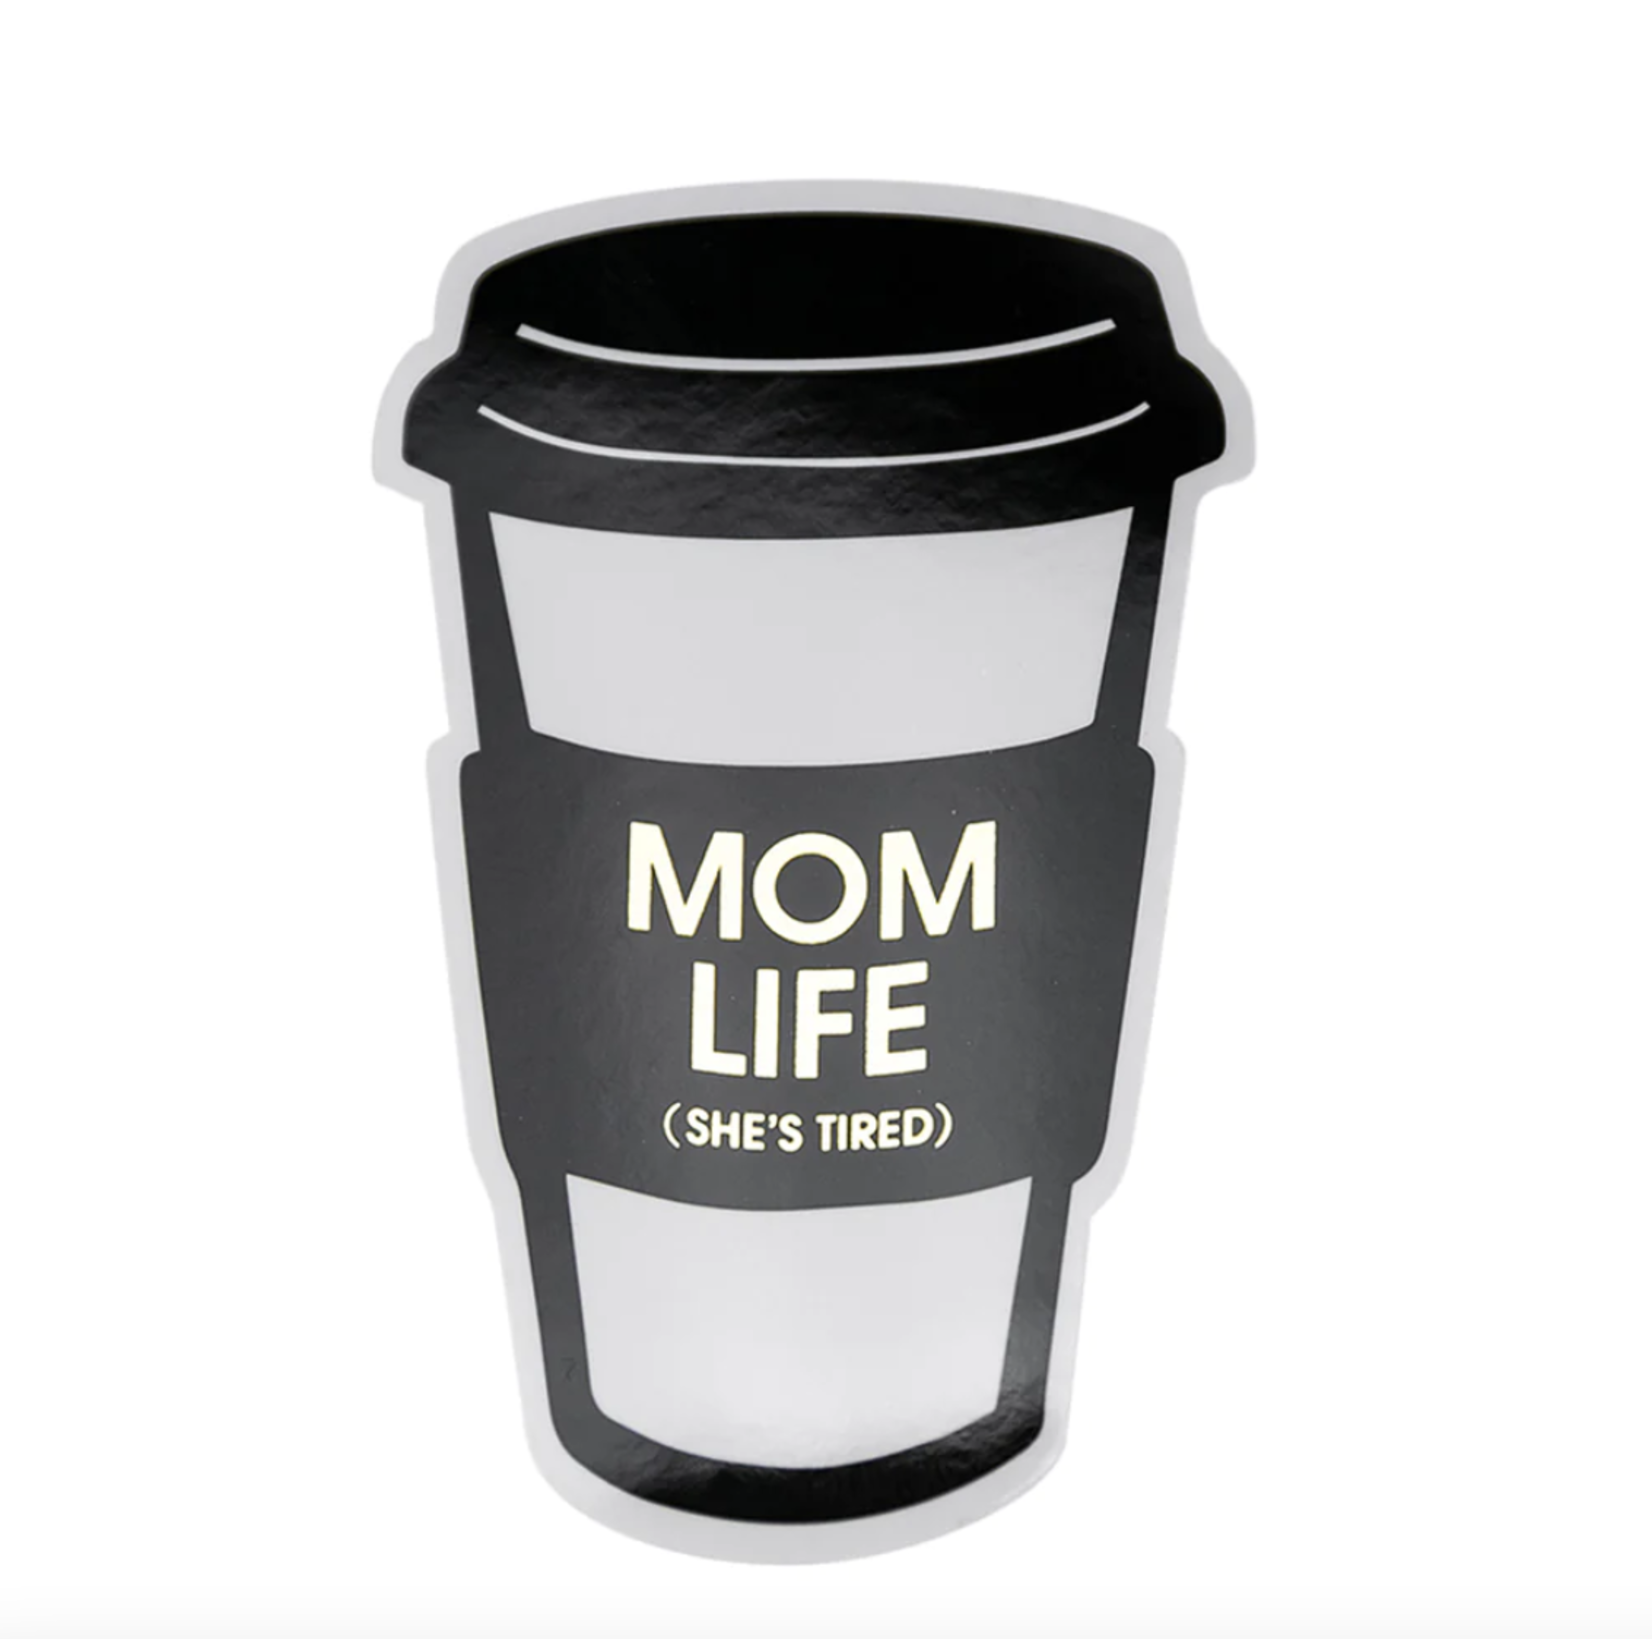 Chez Gagne Mom Life (She's Tired) - Sticker